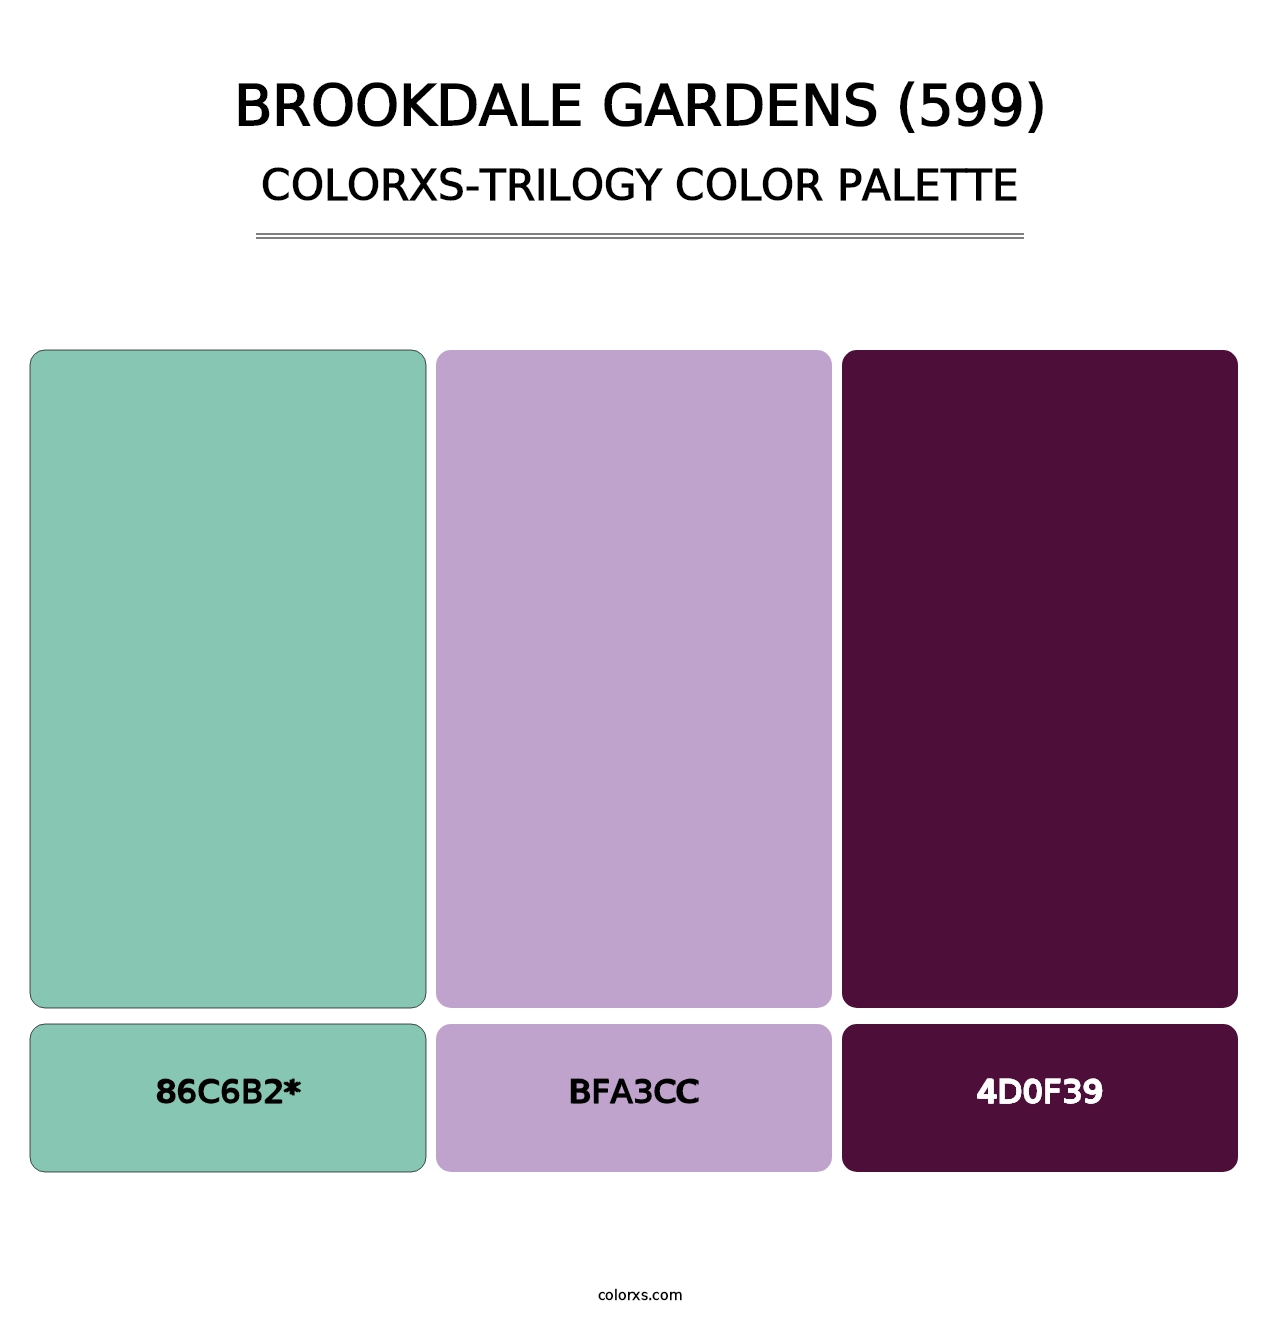 Brookdale Gardens (599) - Colorxs Trilogy Palette